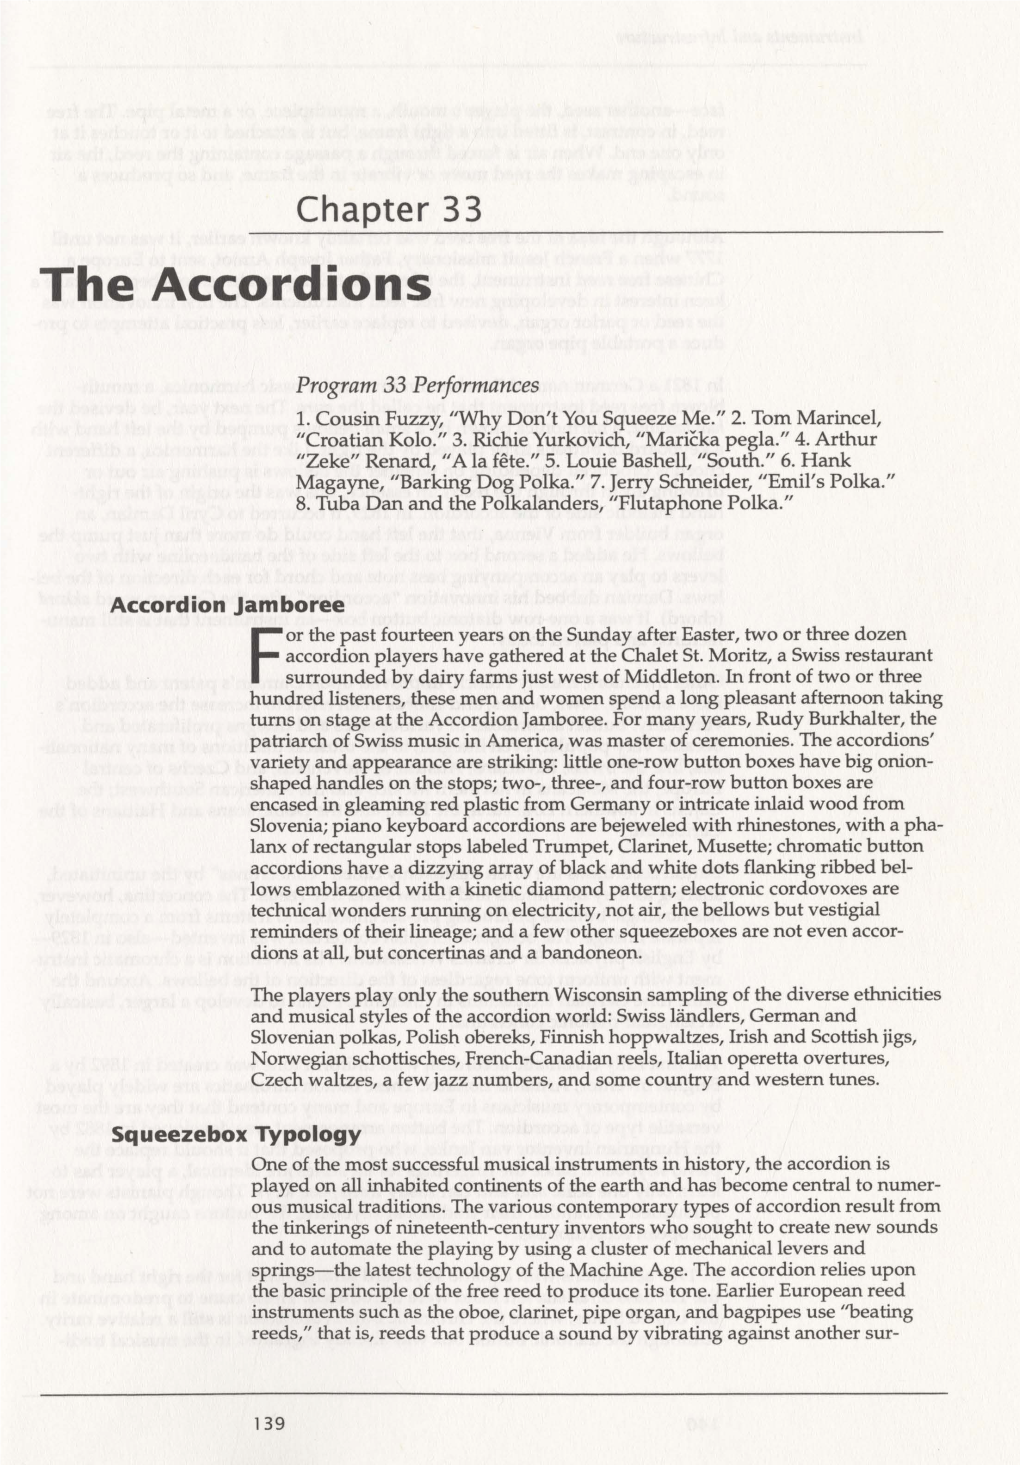 The Accordions